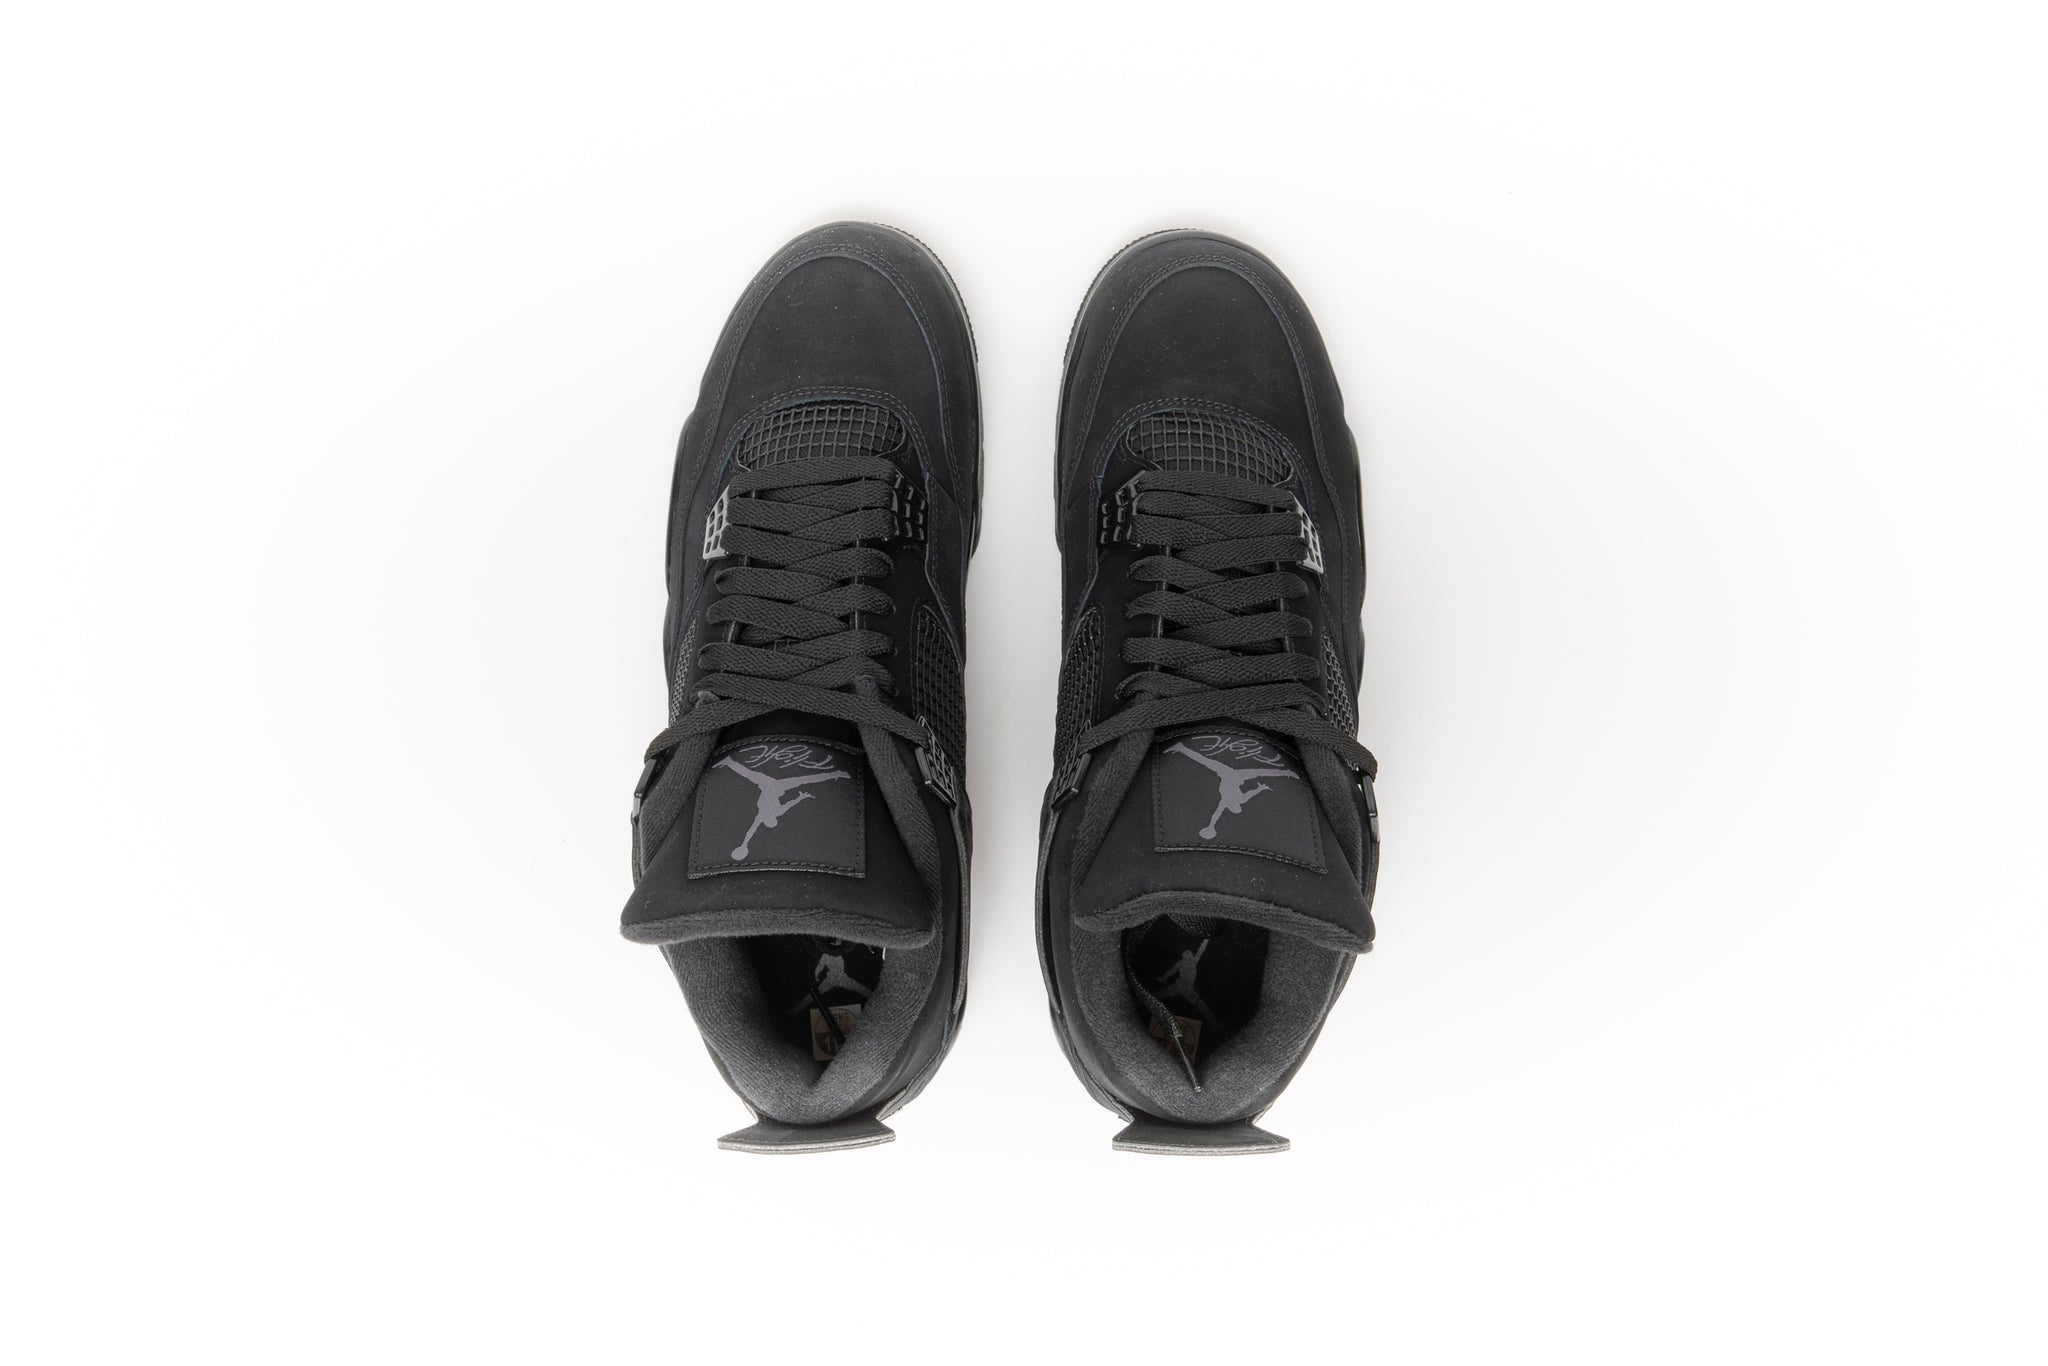 NEW Jordan 4 Retro “Black Cat” (With Original Box)